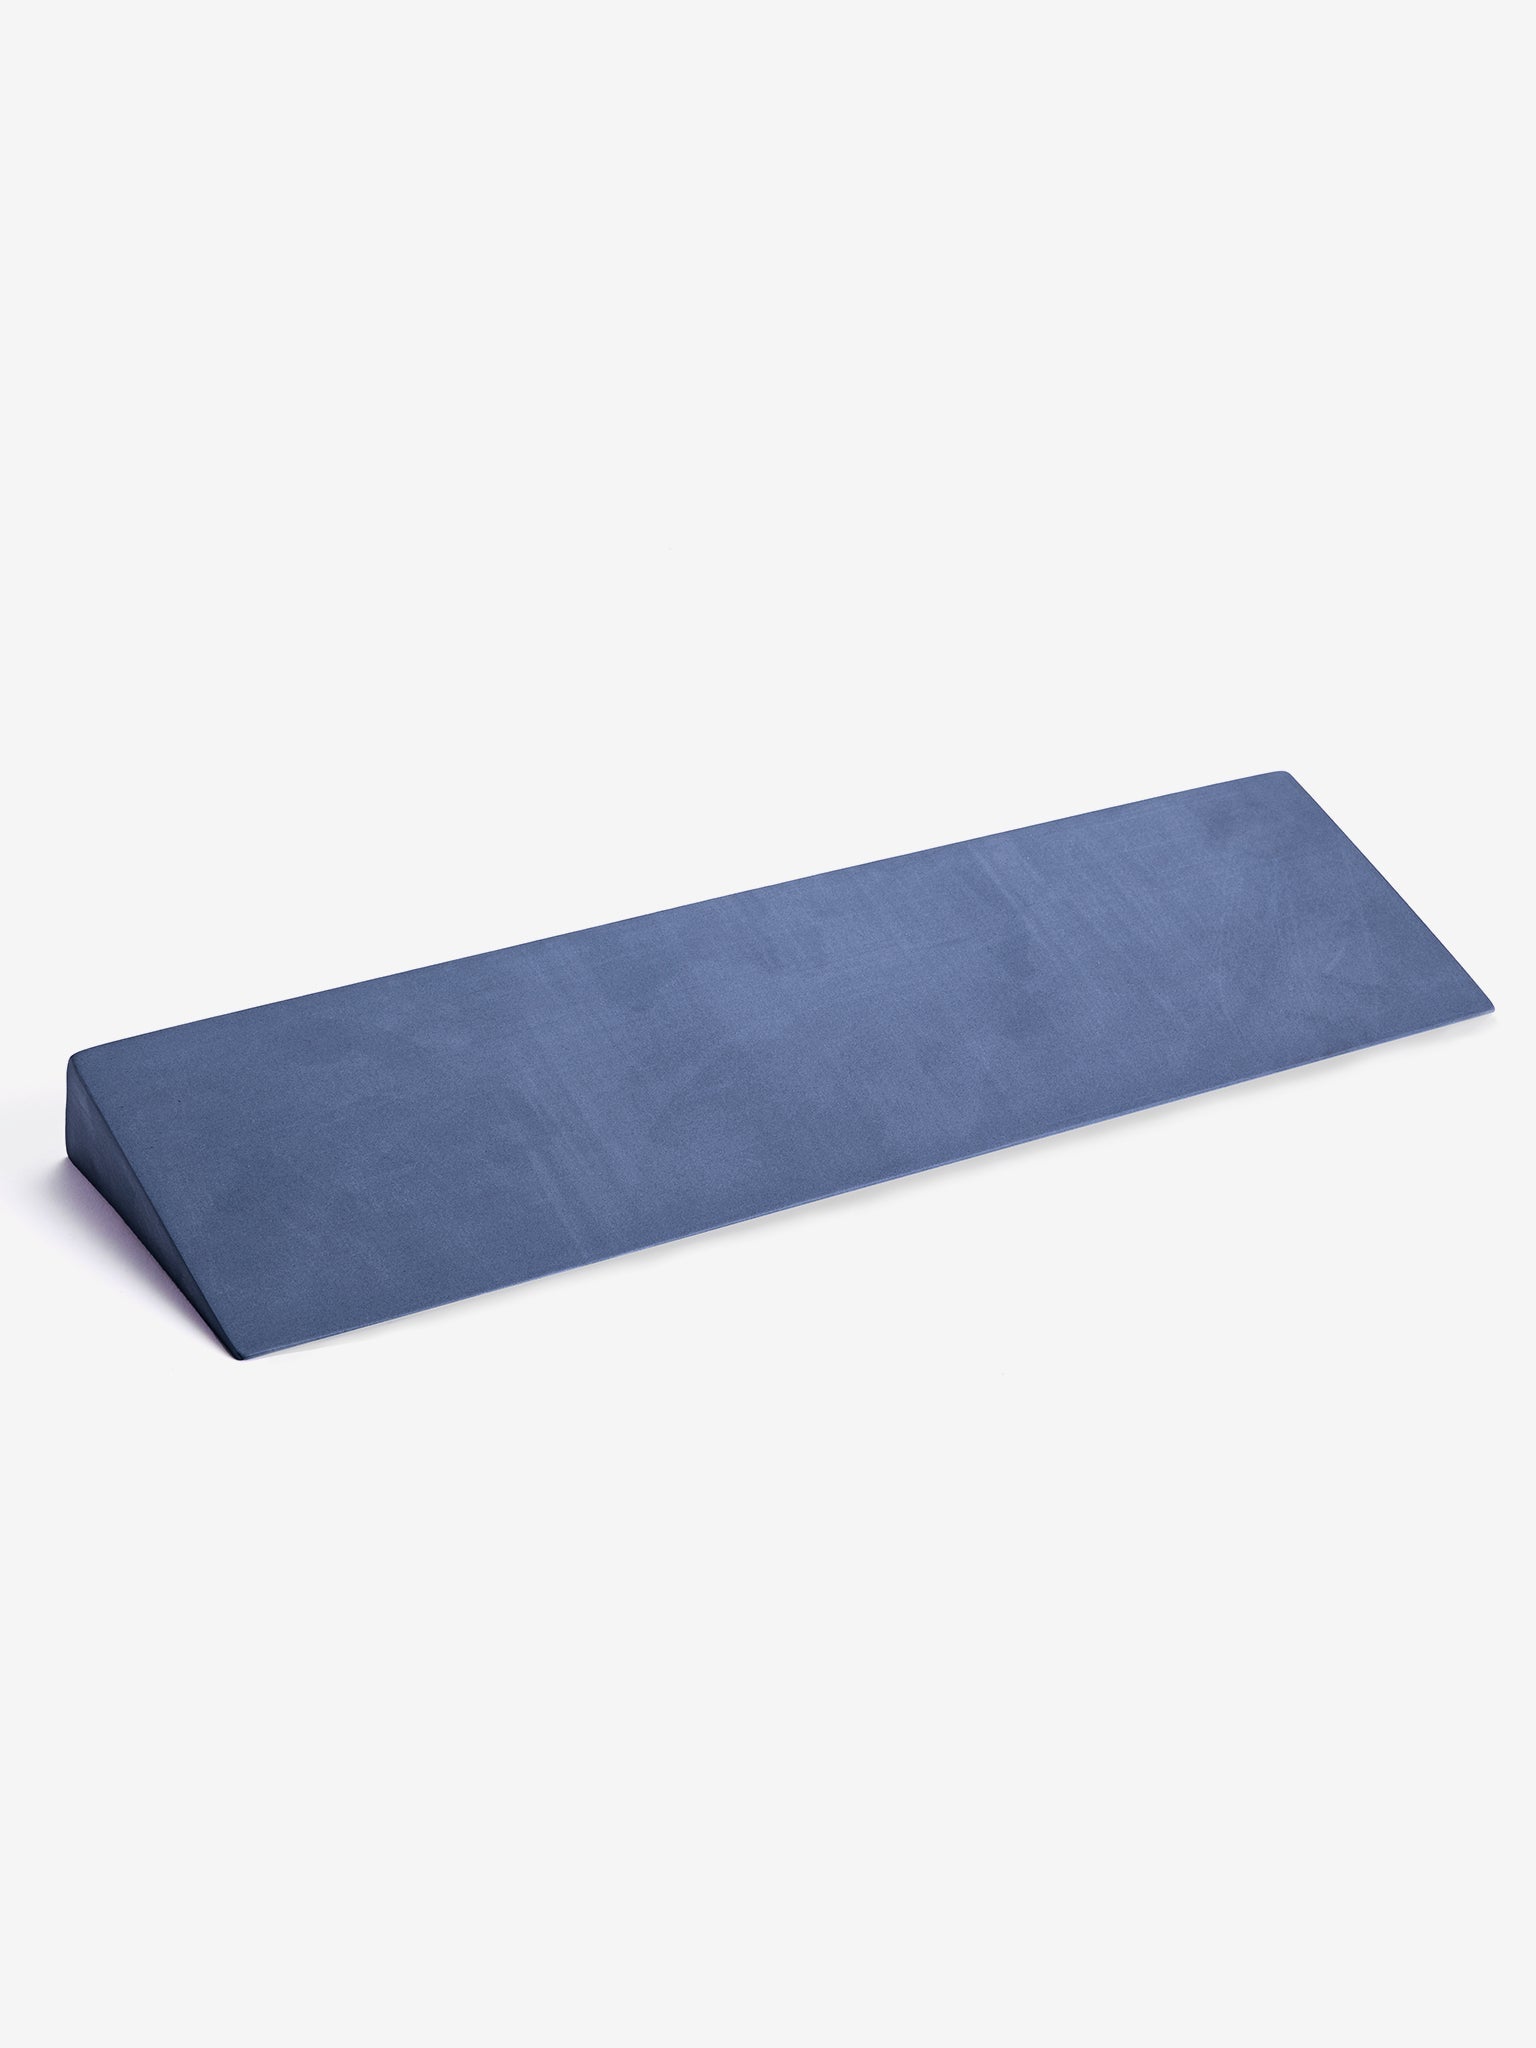 Yogamatters Lightweight Foam Yoga Wedge - Navy Blue - Box of 12